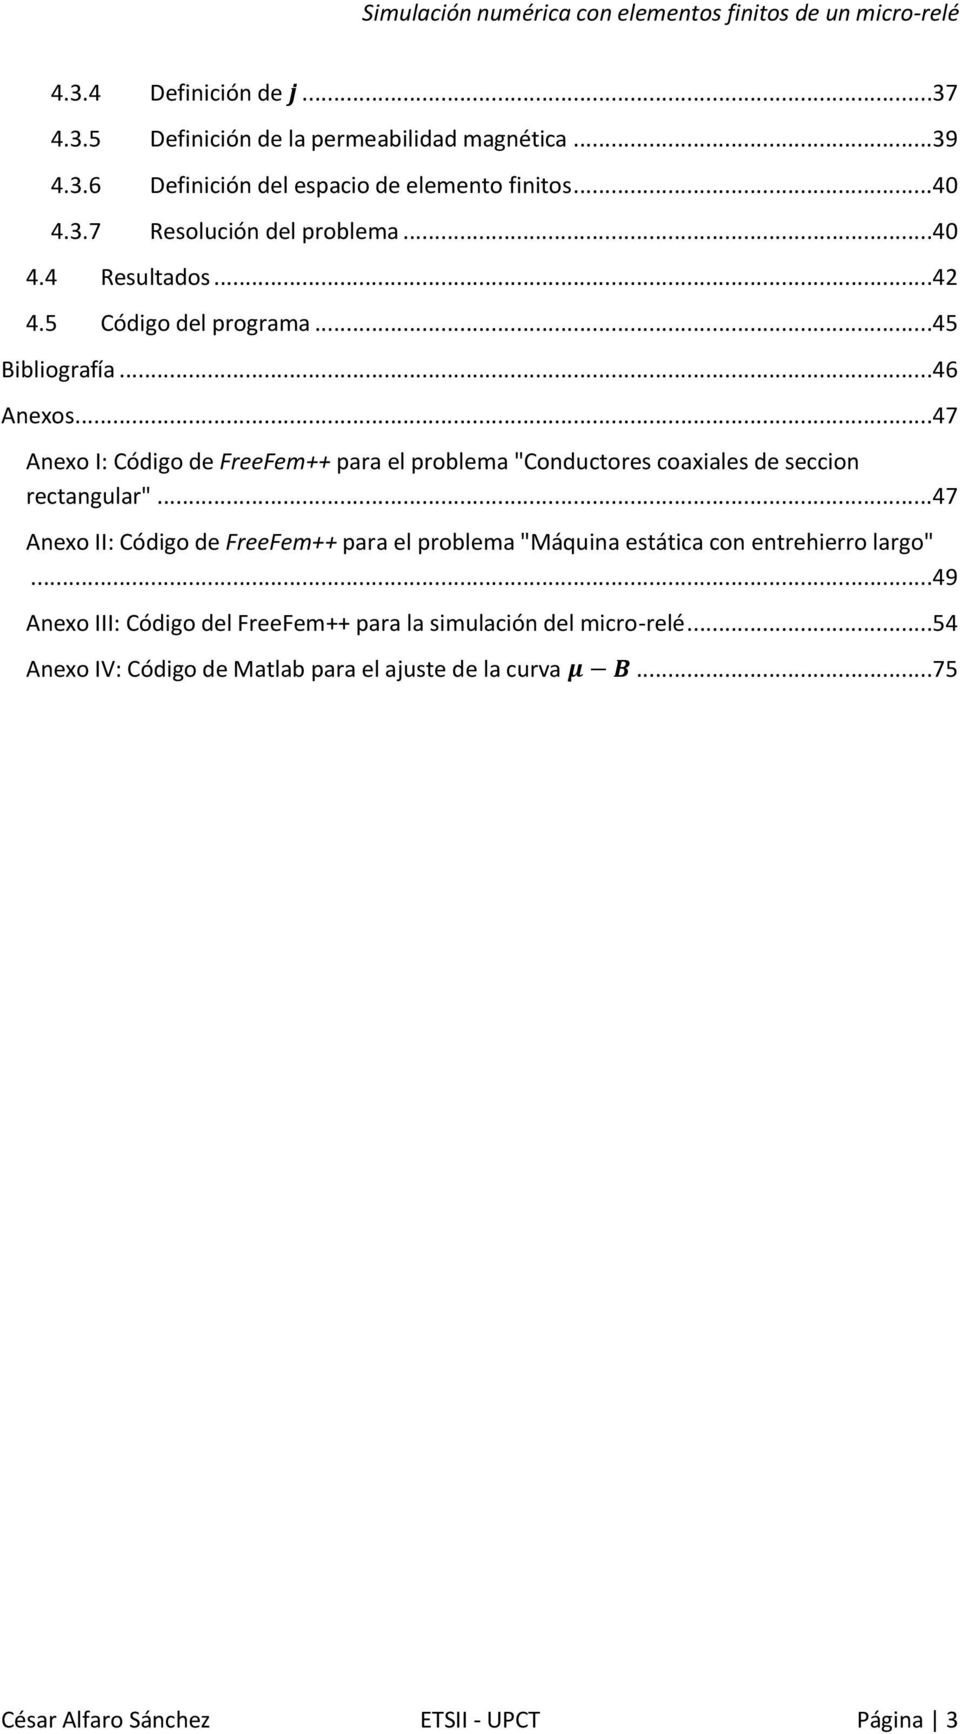 ..47 Anexo I: Código de FreeFem++ para el problema "Conductores coaxiales de seccion rectangular".